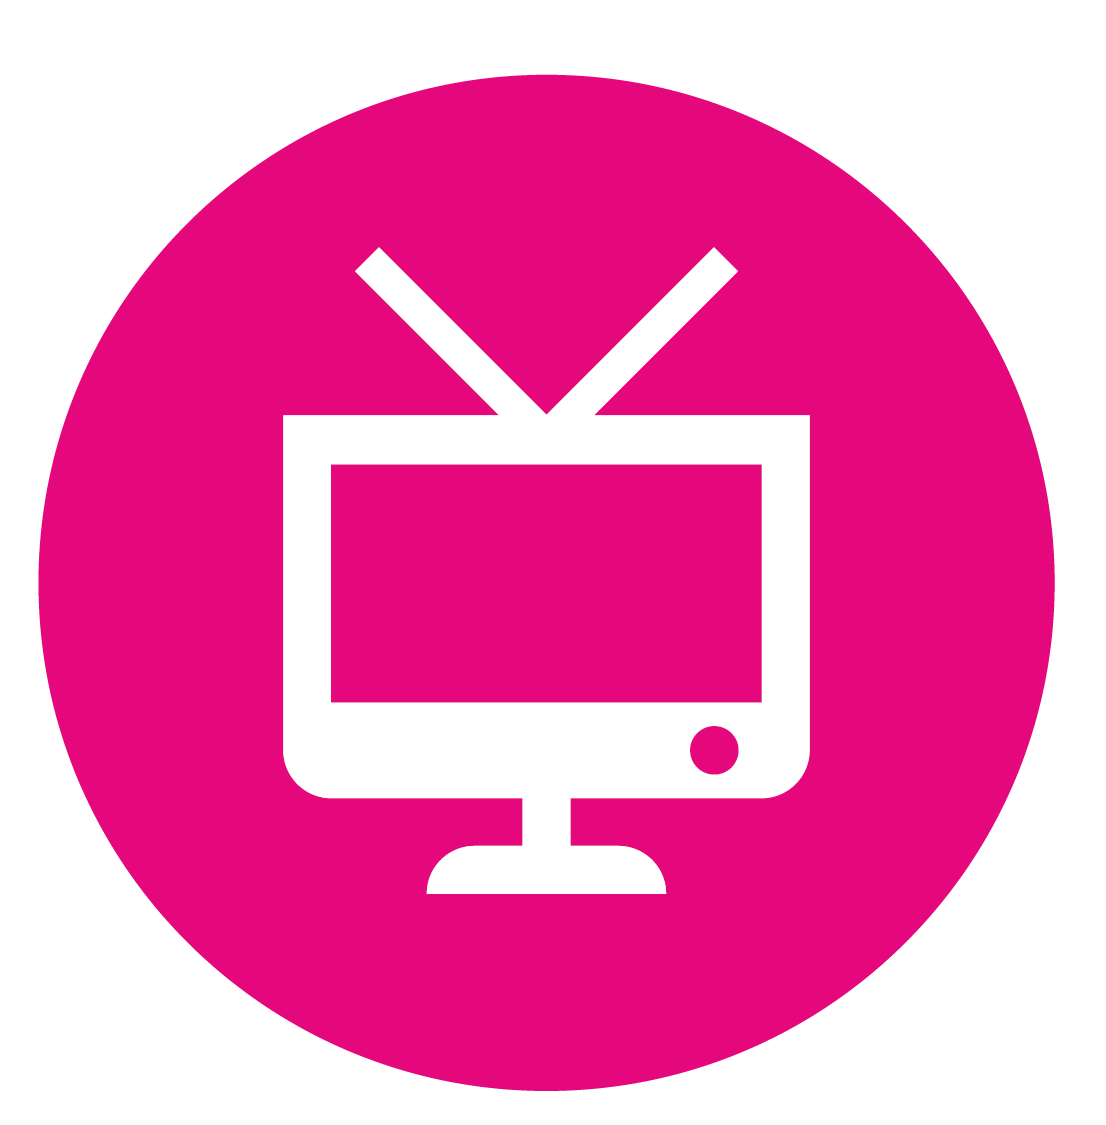 Логотип телевизора. Пиктограмма телевизор. Телевизор логотип. Телевизор символ. "Значок ""TV""".